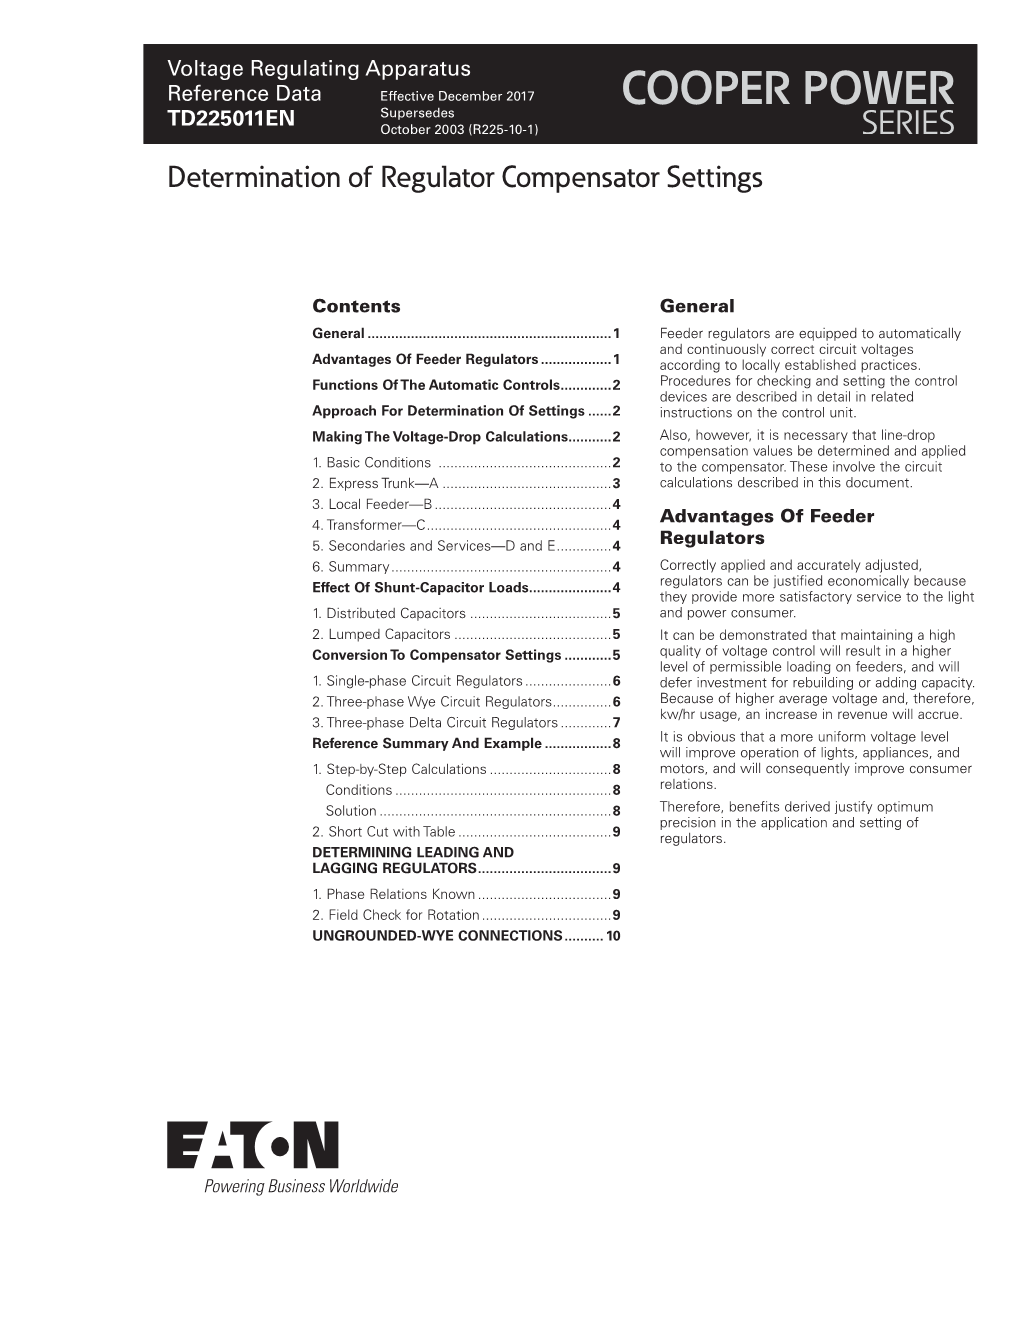 Voltage Regulator Compensation Settings